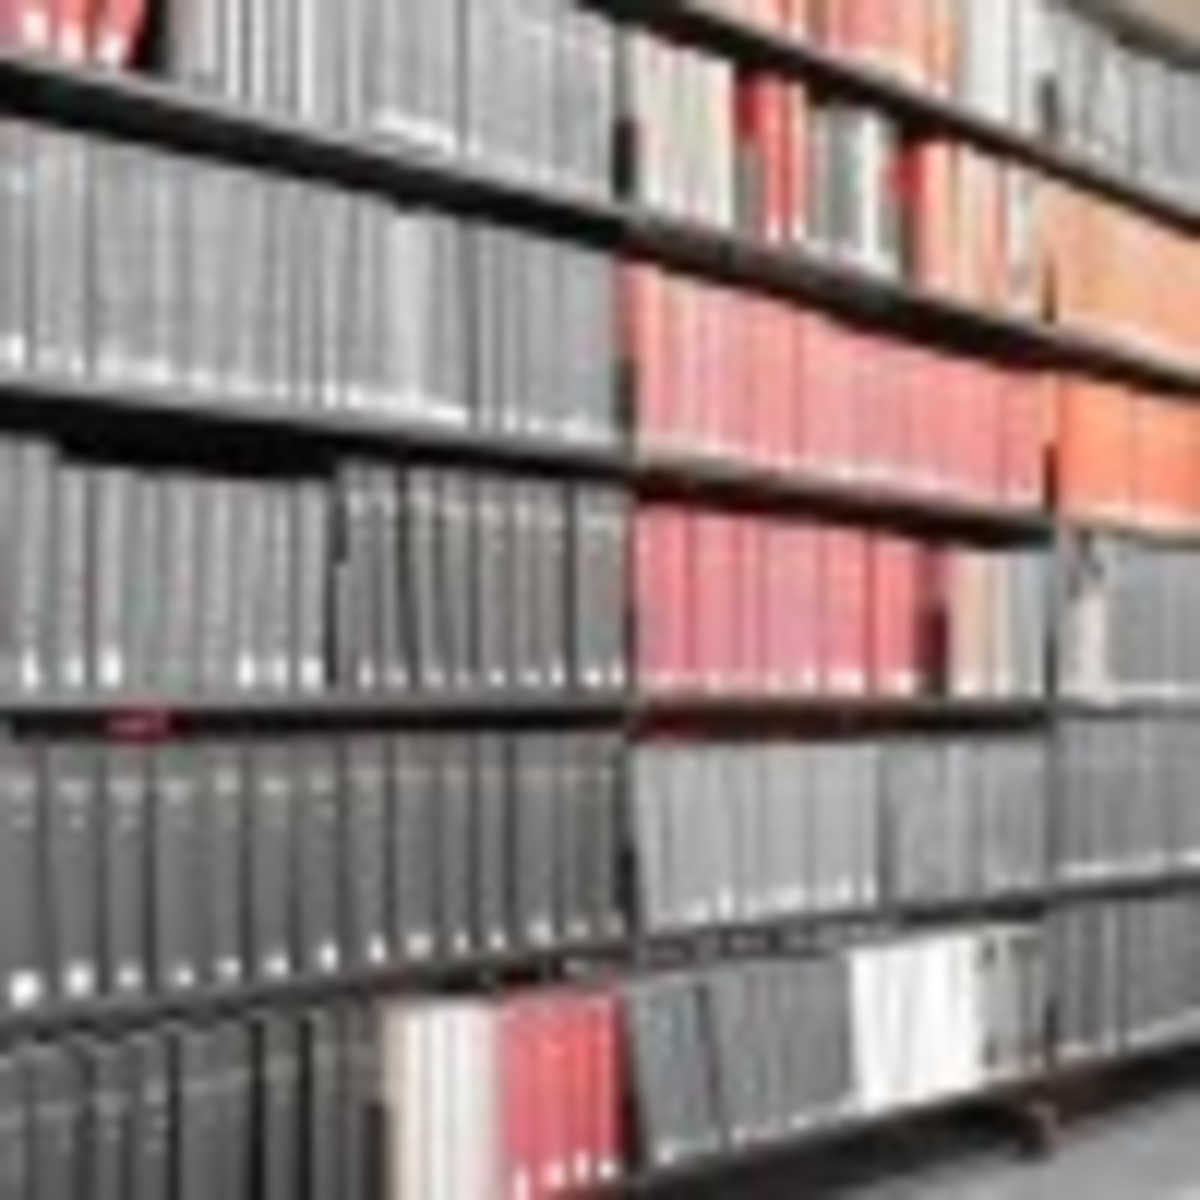 academic-books-journals-shelves-100x100